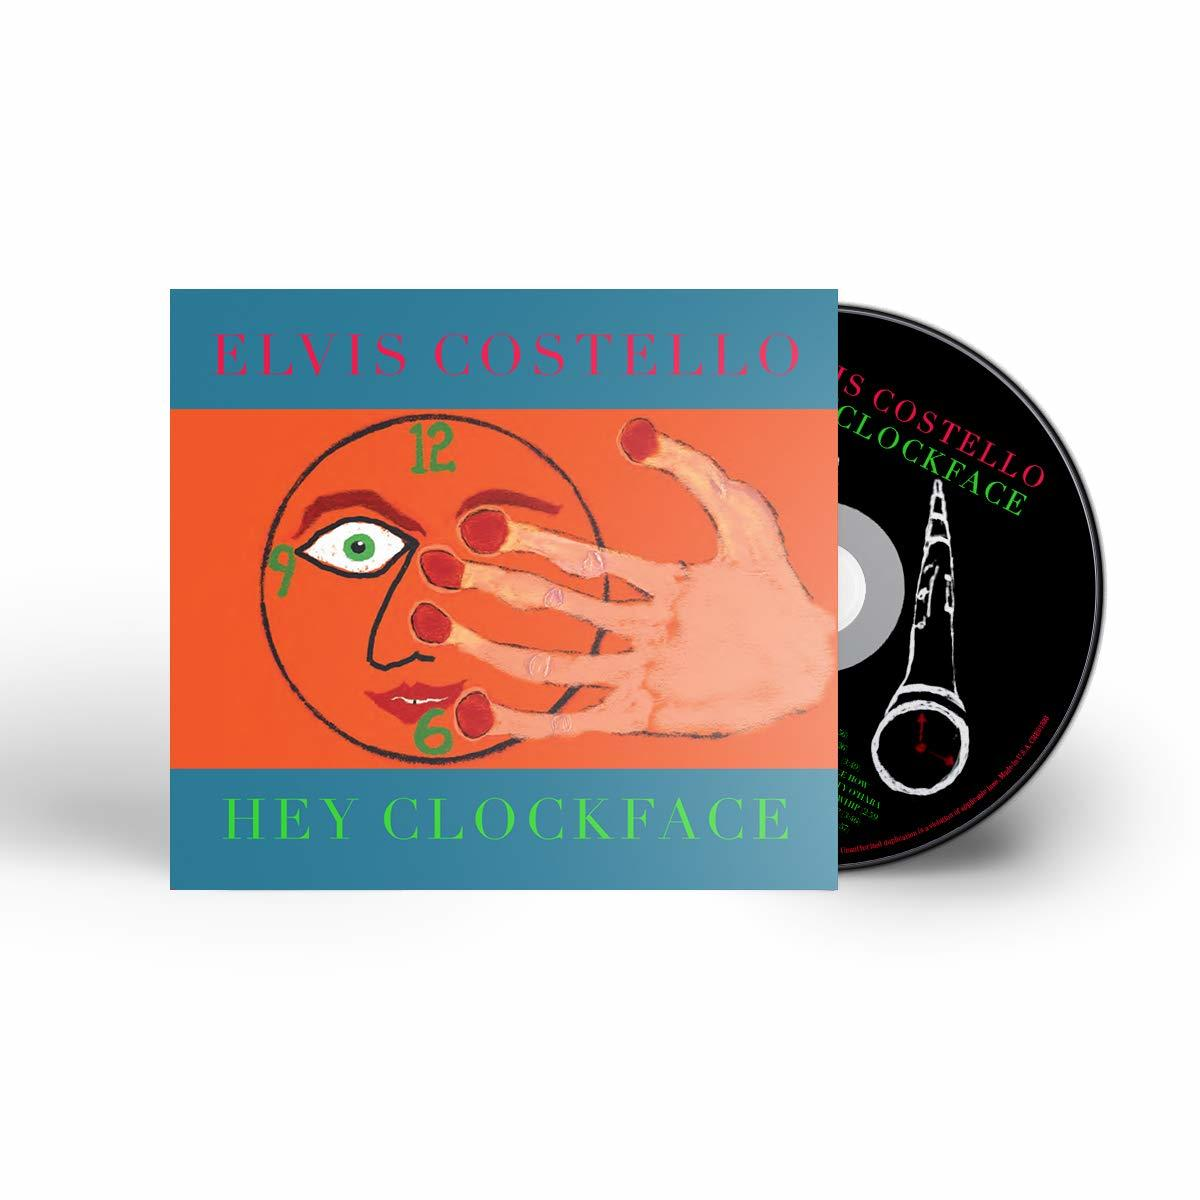 Elvis Costello - Hey Clockface - (CD)